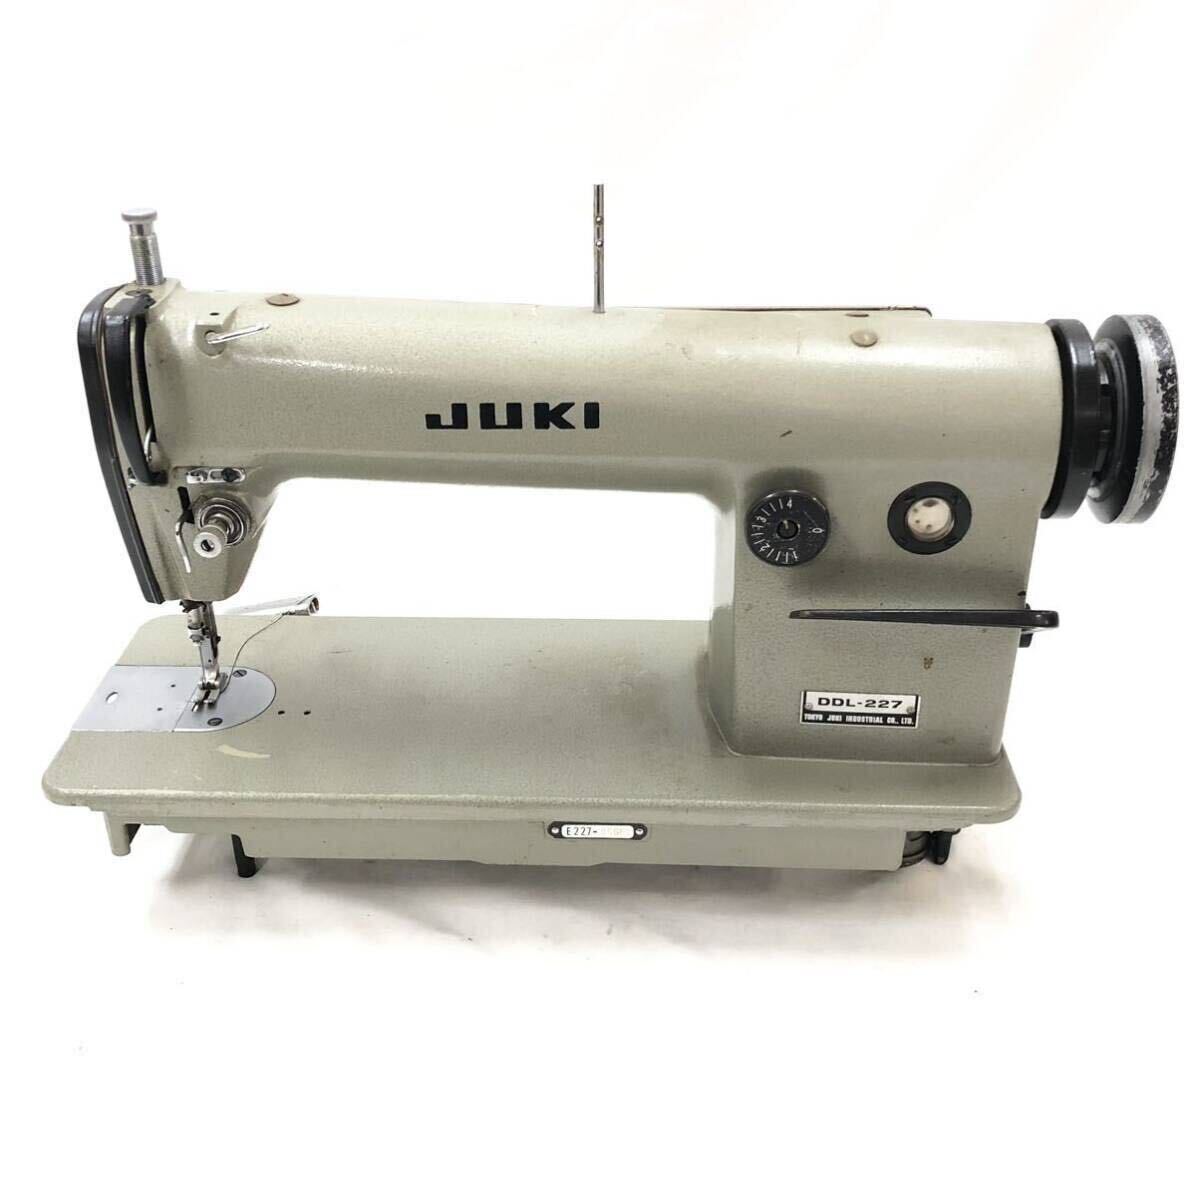 FN11599U JUKI ジューキ DDL-227 ミシン 工業用ミシン 手芸 ハンドメイド 裁縫 レトロ ジャンク_画像2